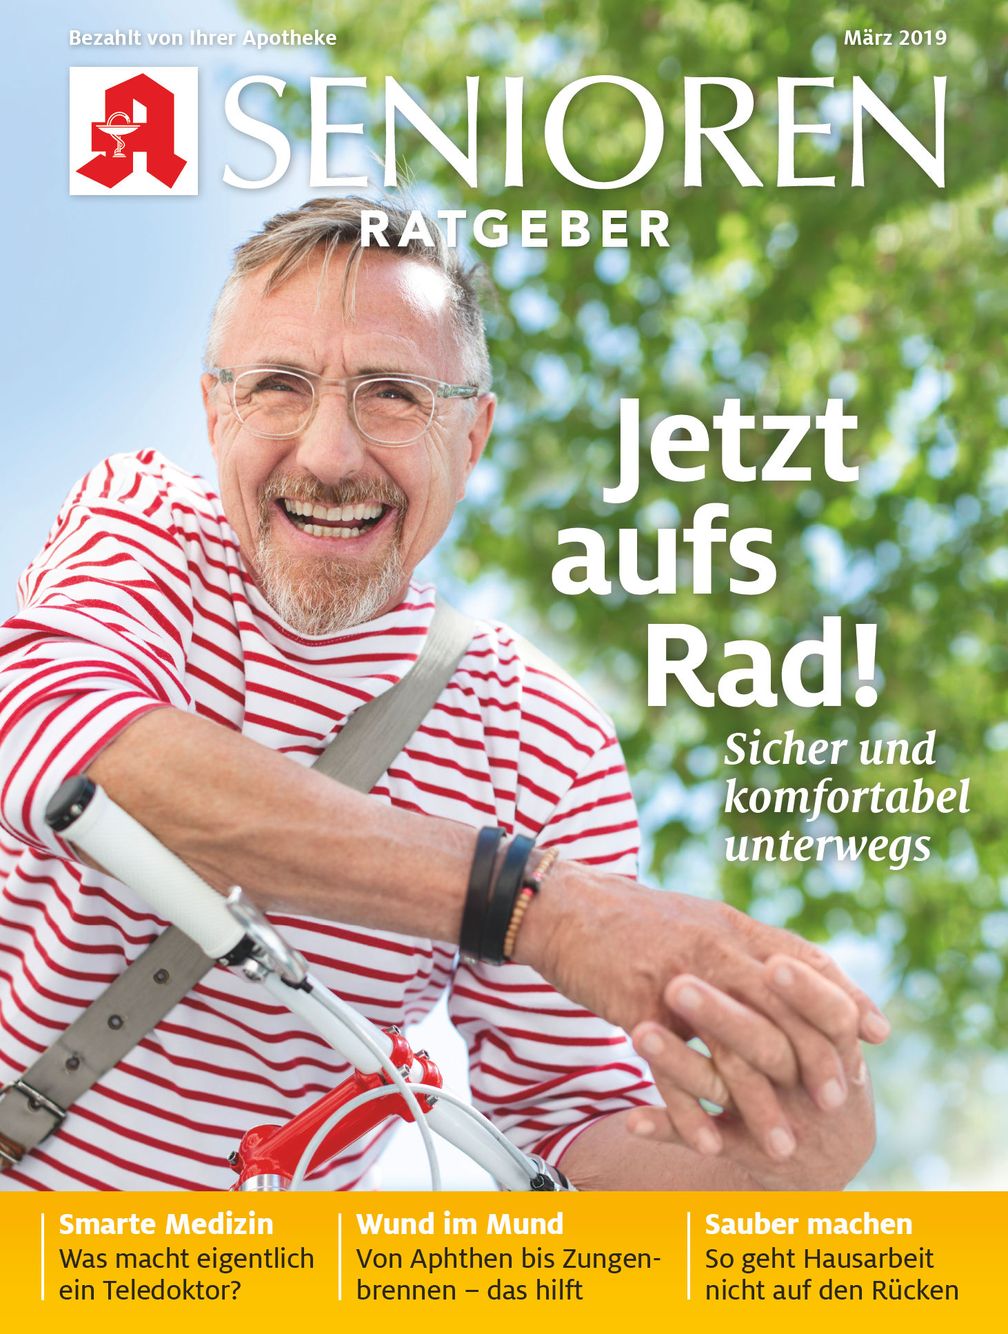 Bild: "obs/Wort & Bild Verlag - Senioren Ratgeber"